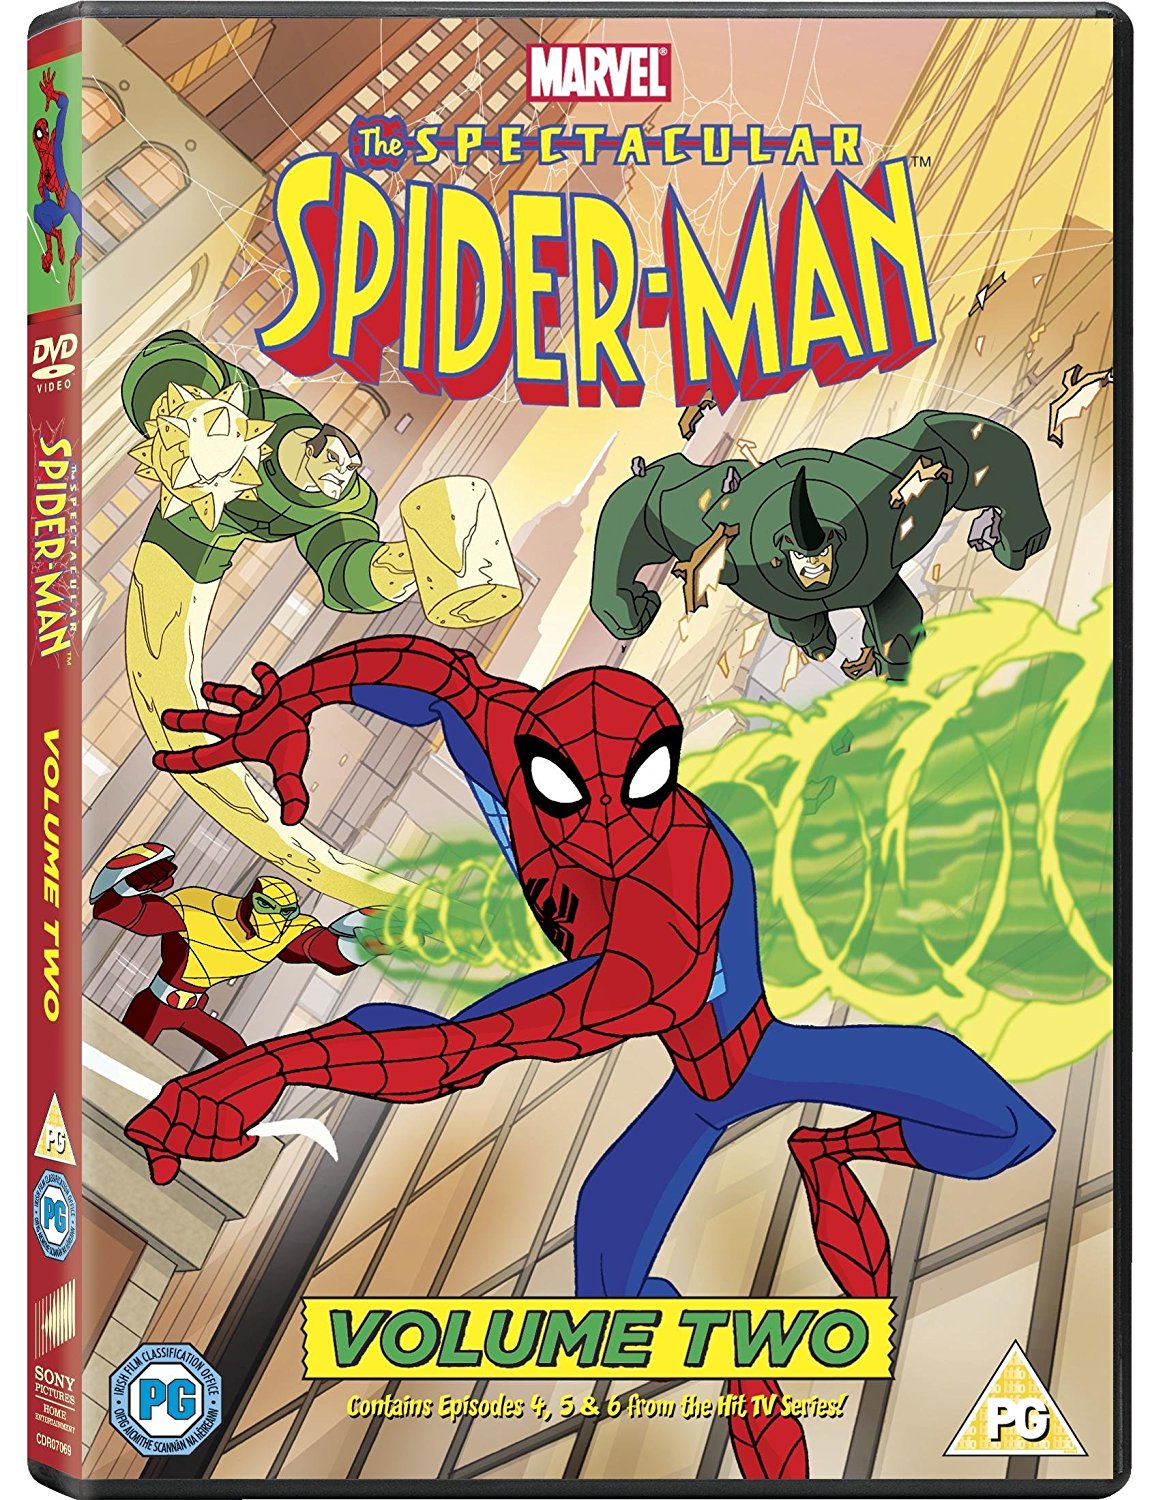 The Spectacular Spider-Man Vol. 2 |